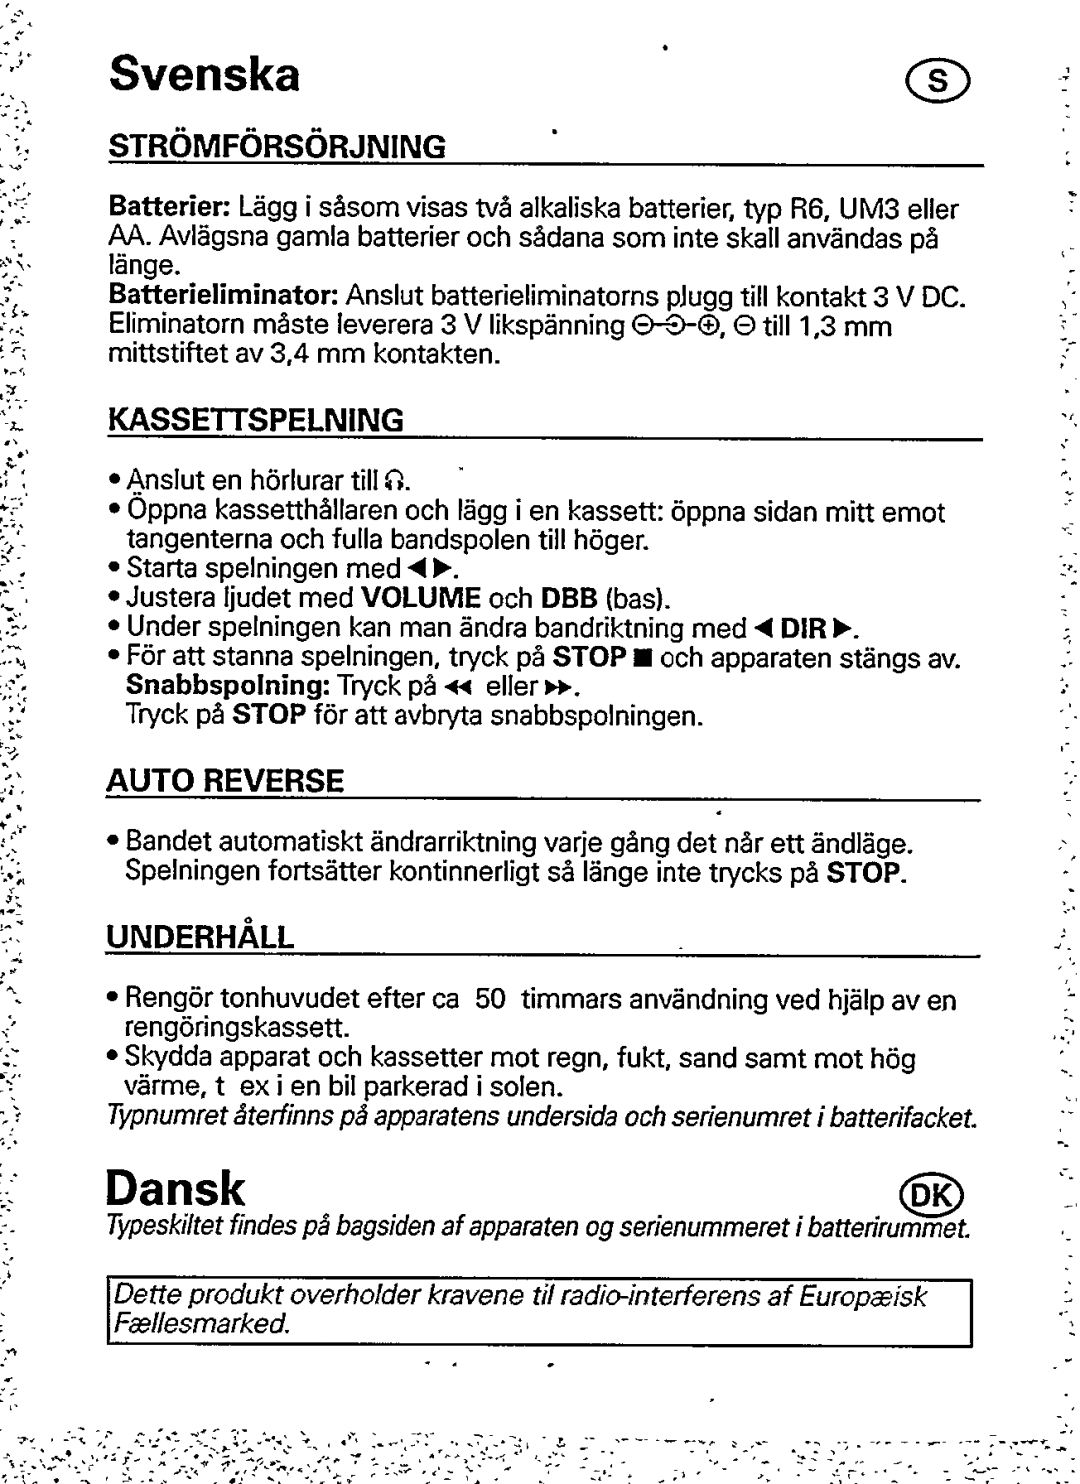 Philips AQ 6422/00 manual 